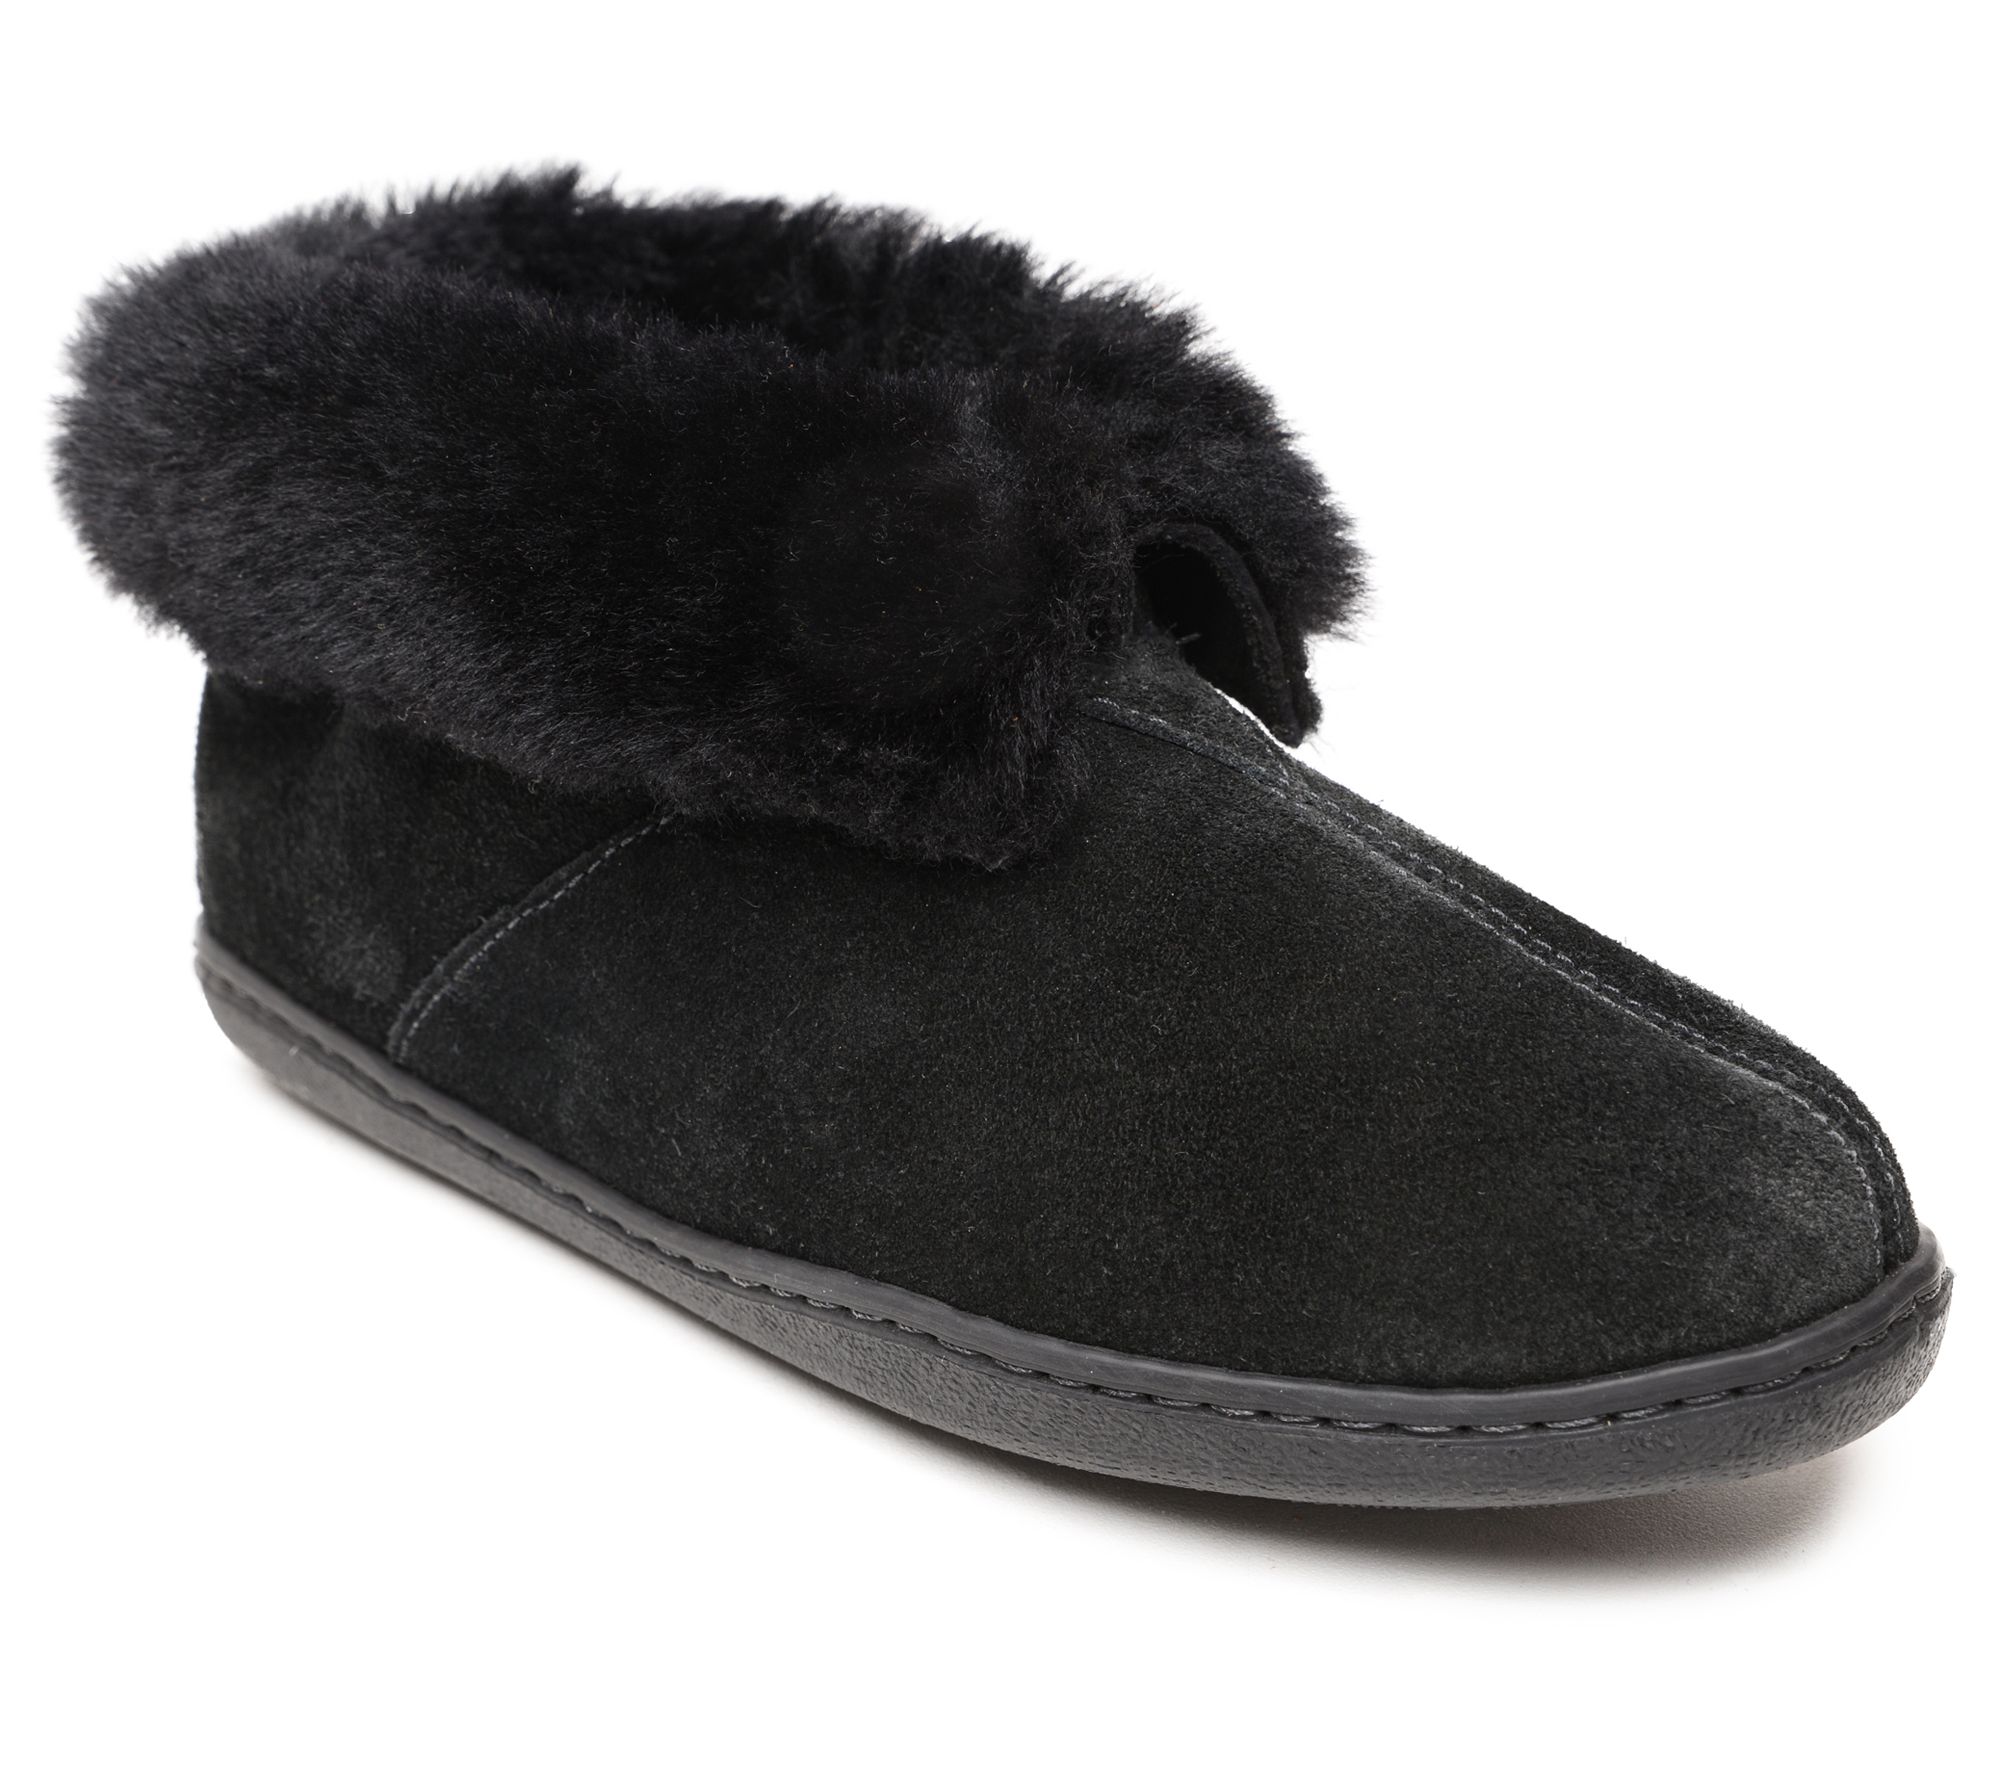 Minnetonka Women's Sheepskin Pull-On Gray AnkleBoot Slippers - QVC.com